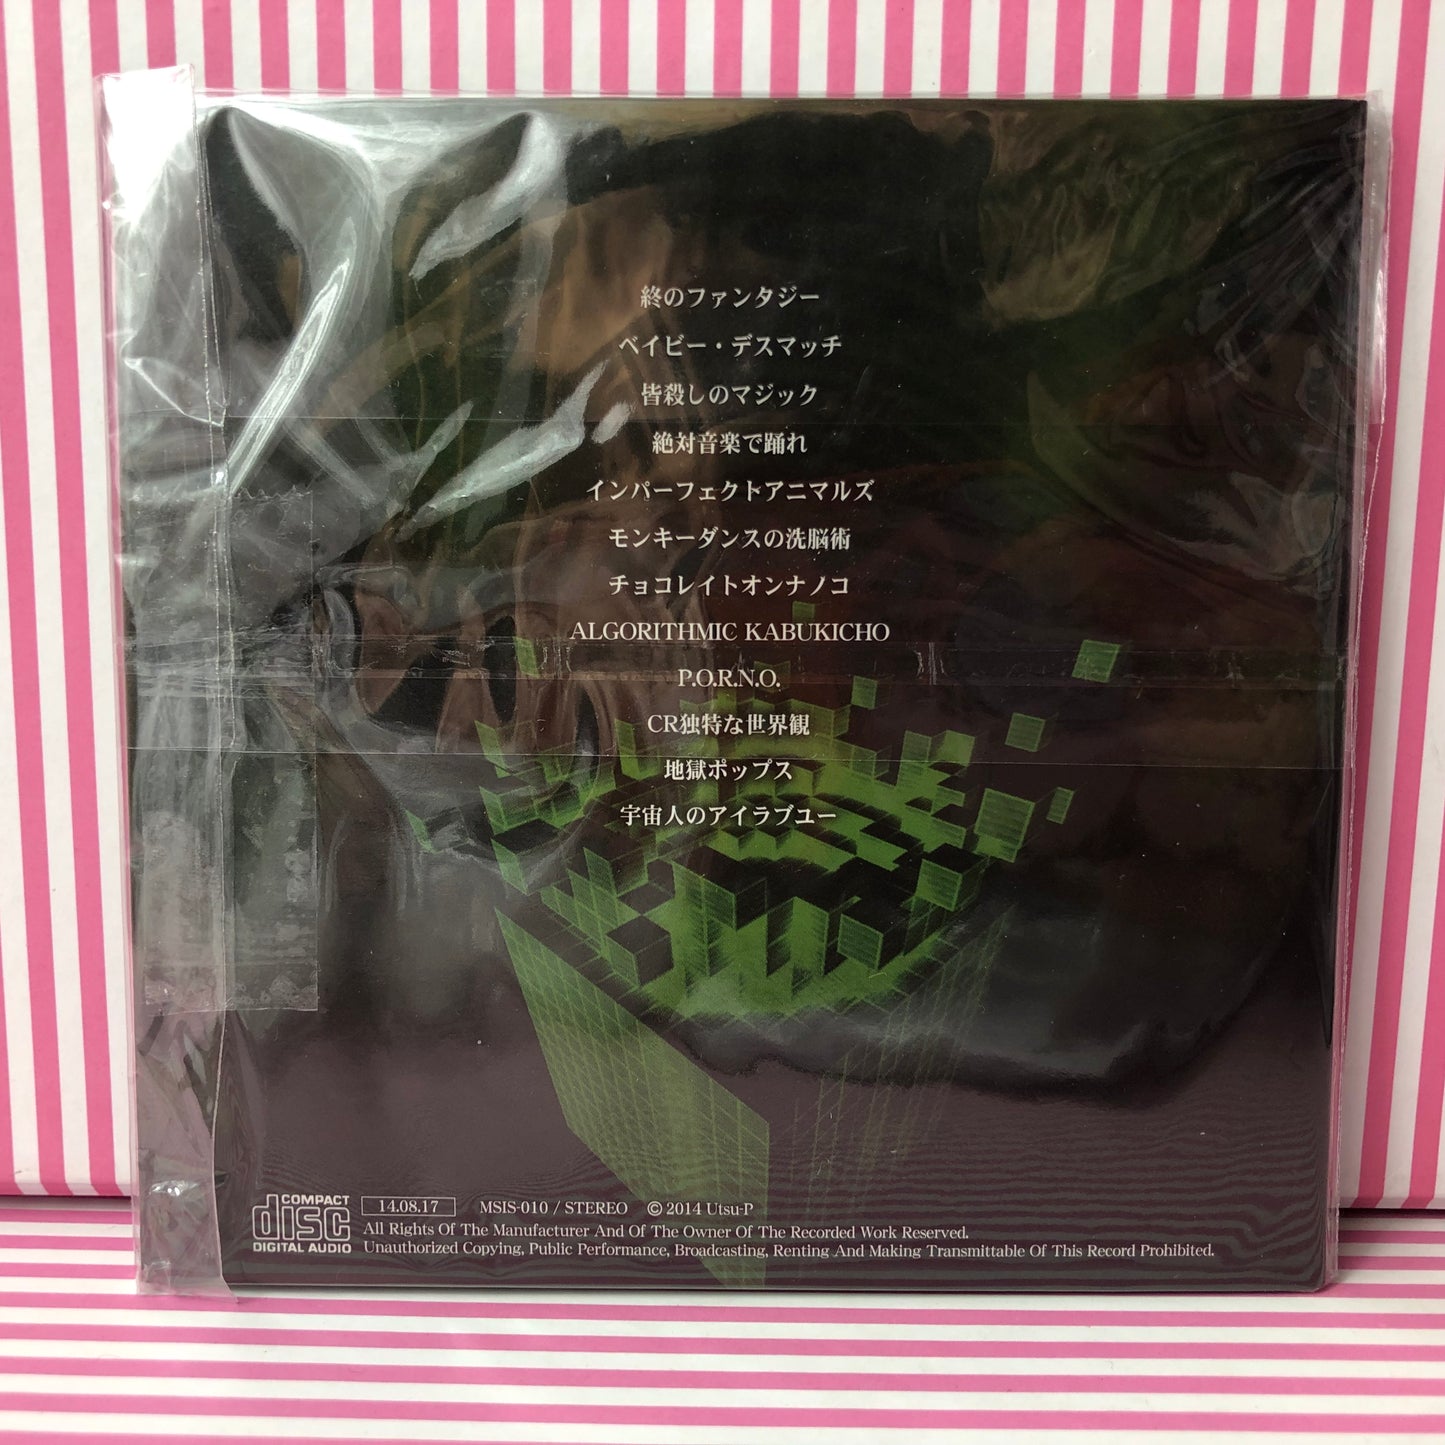 UTSU-P - Algorithme Vocaloid Hatsune Miku CD